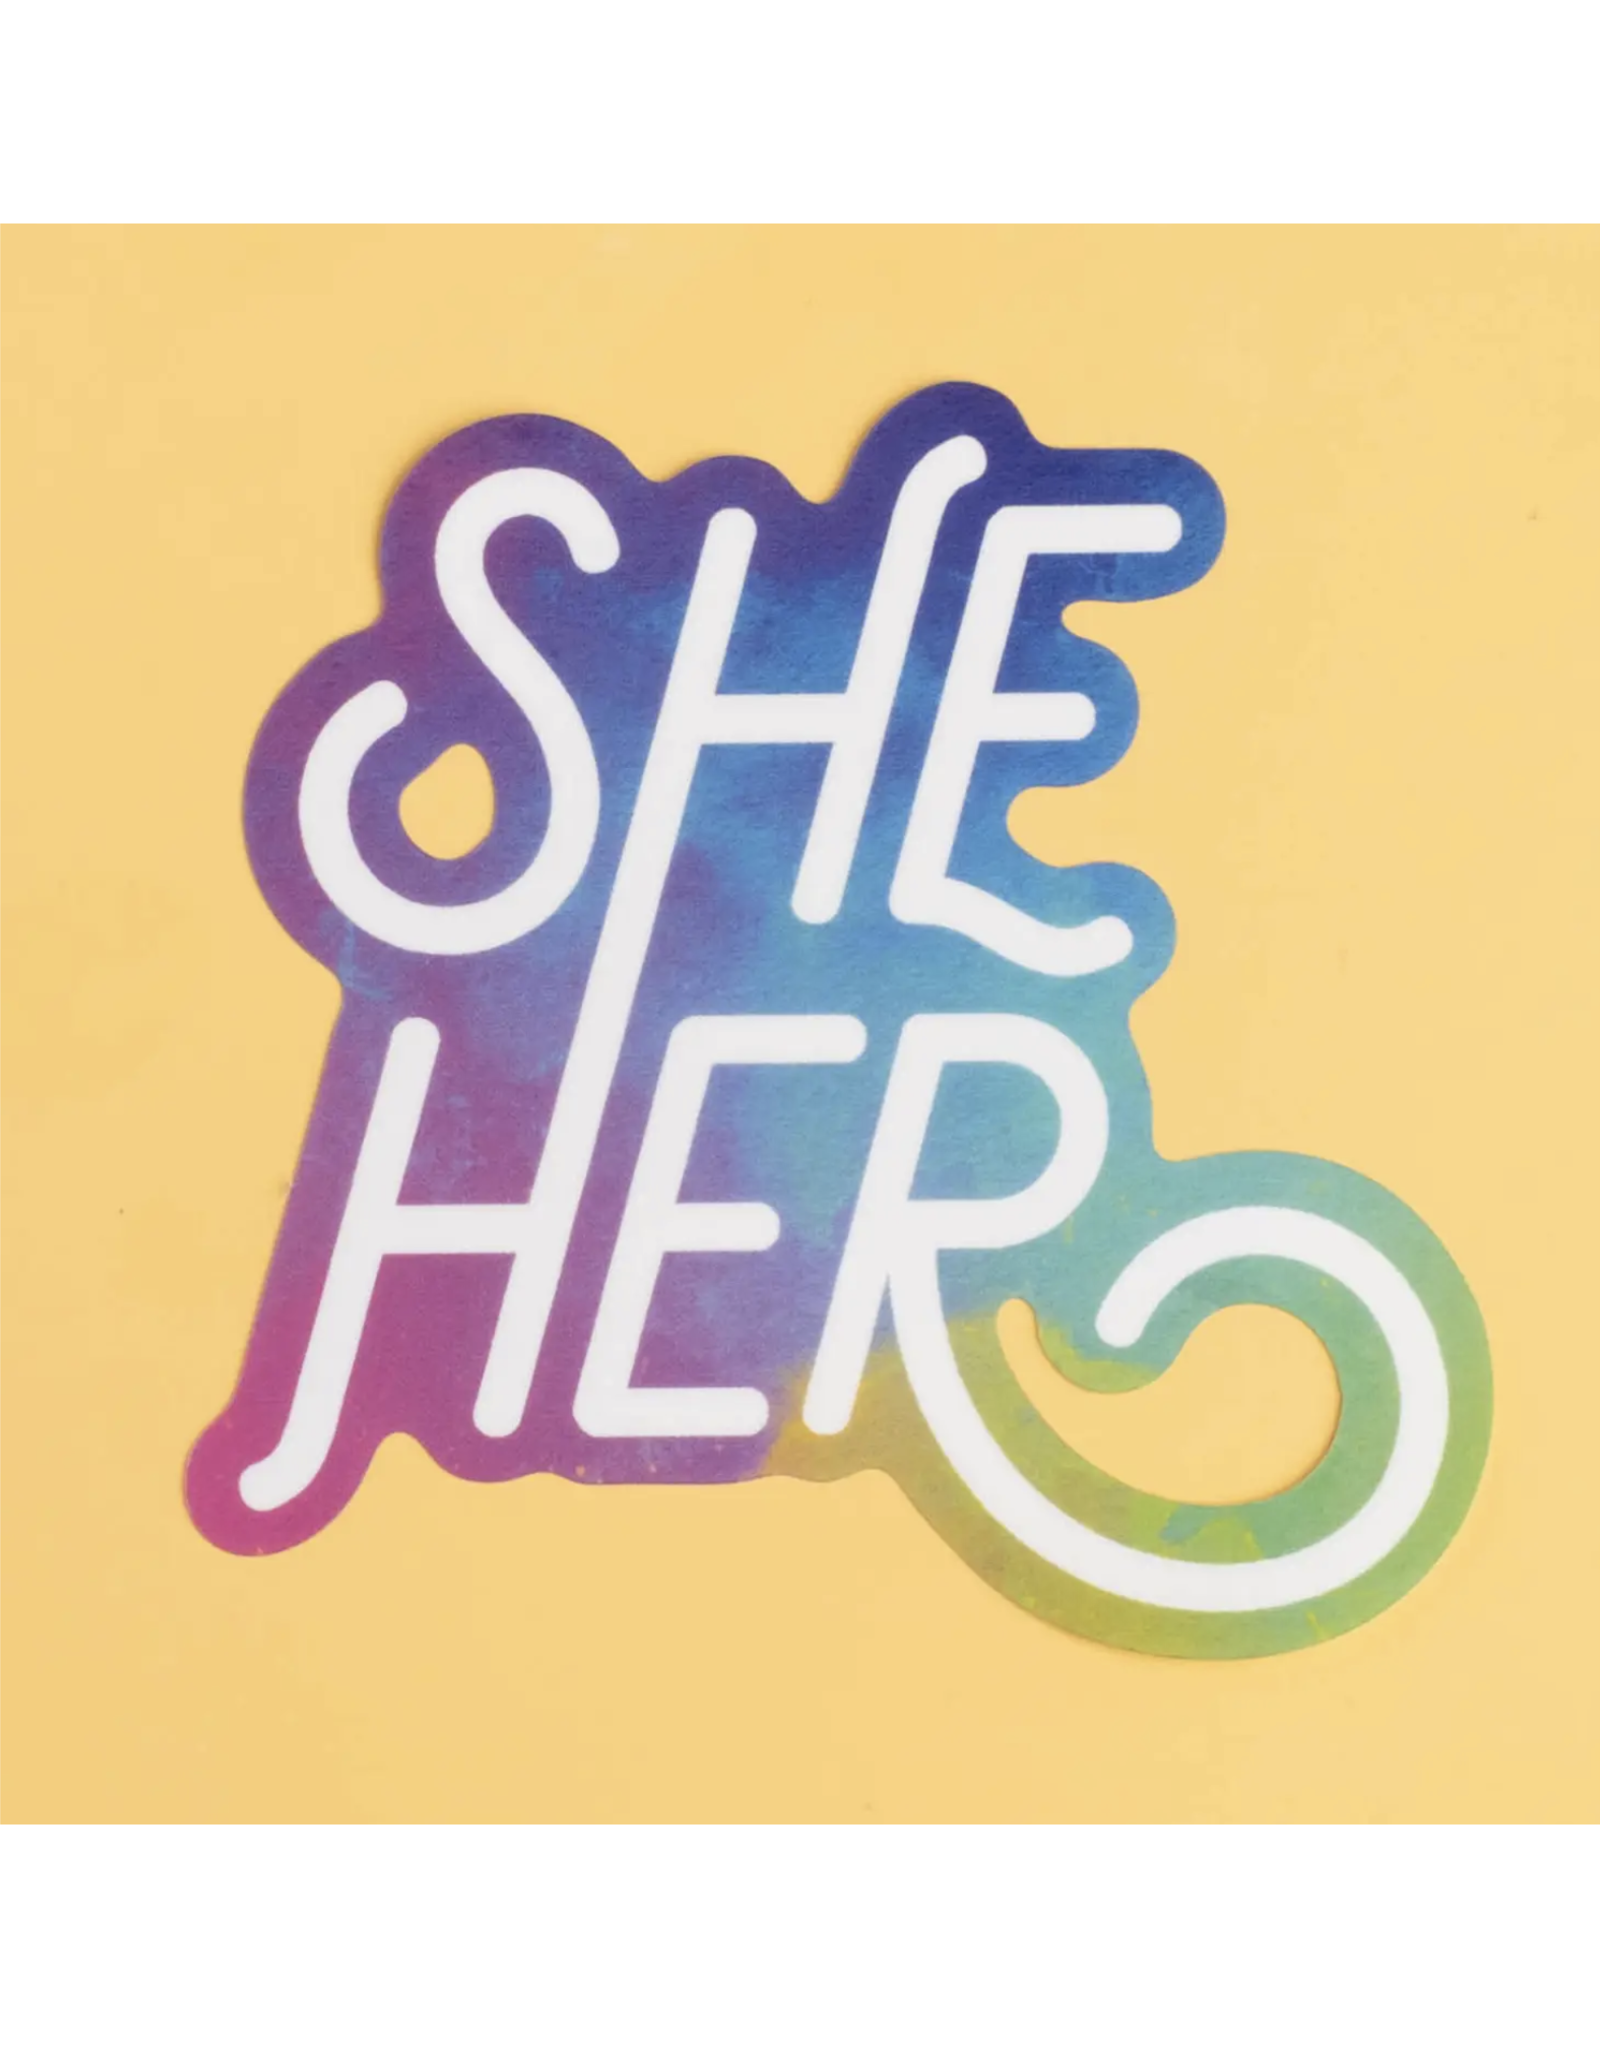 Pronoun Sticker Sheet - She/Her